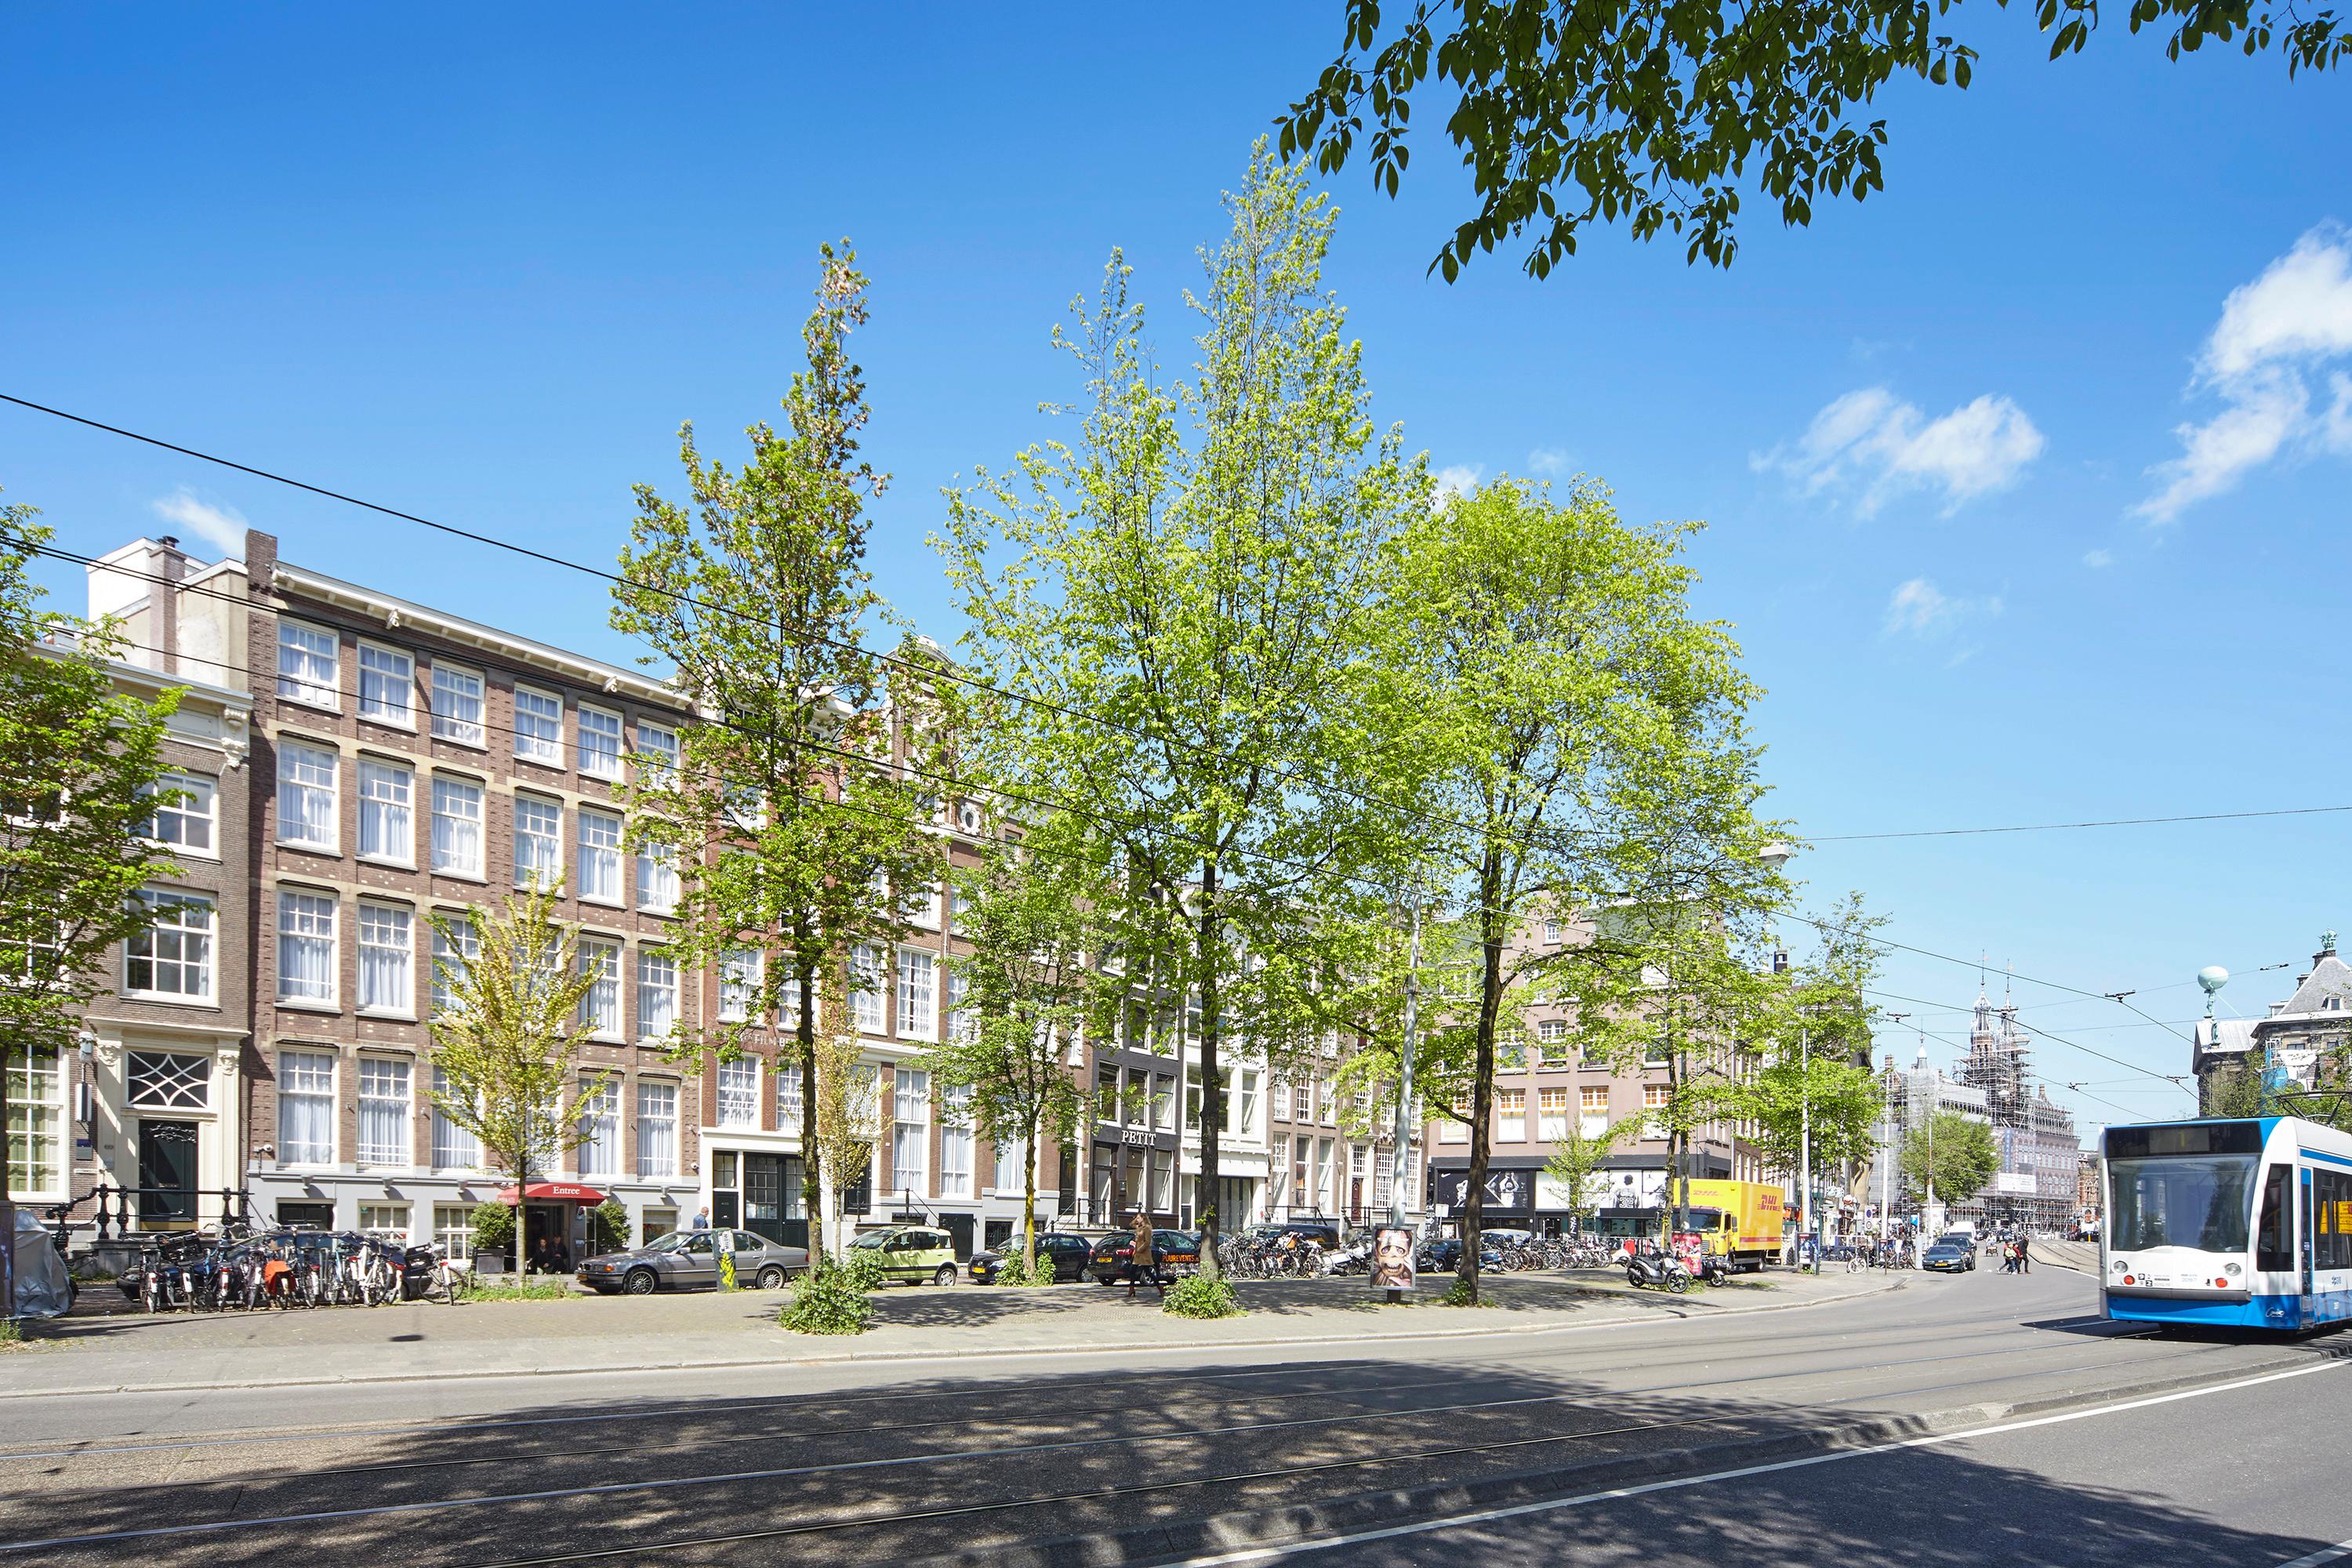 Nova Hotel Amsterdam <br/>99.00 ew <br/> <a href='http://vakantieoplossing.nl/outpage/?id=04aa8479cf0f6cfc822f11d1b84ee0b0' target='_blank'>View Details</a>